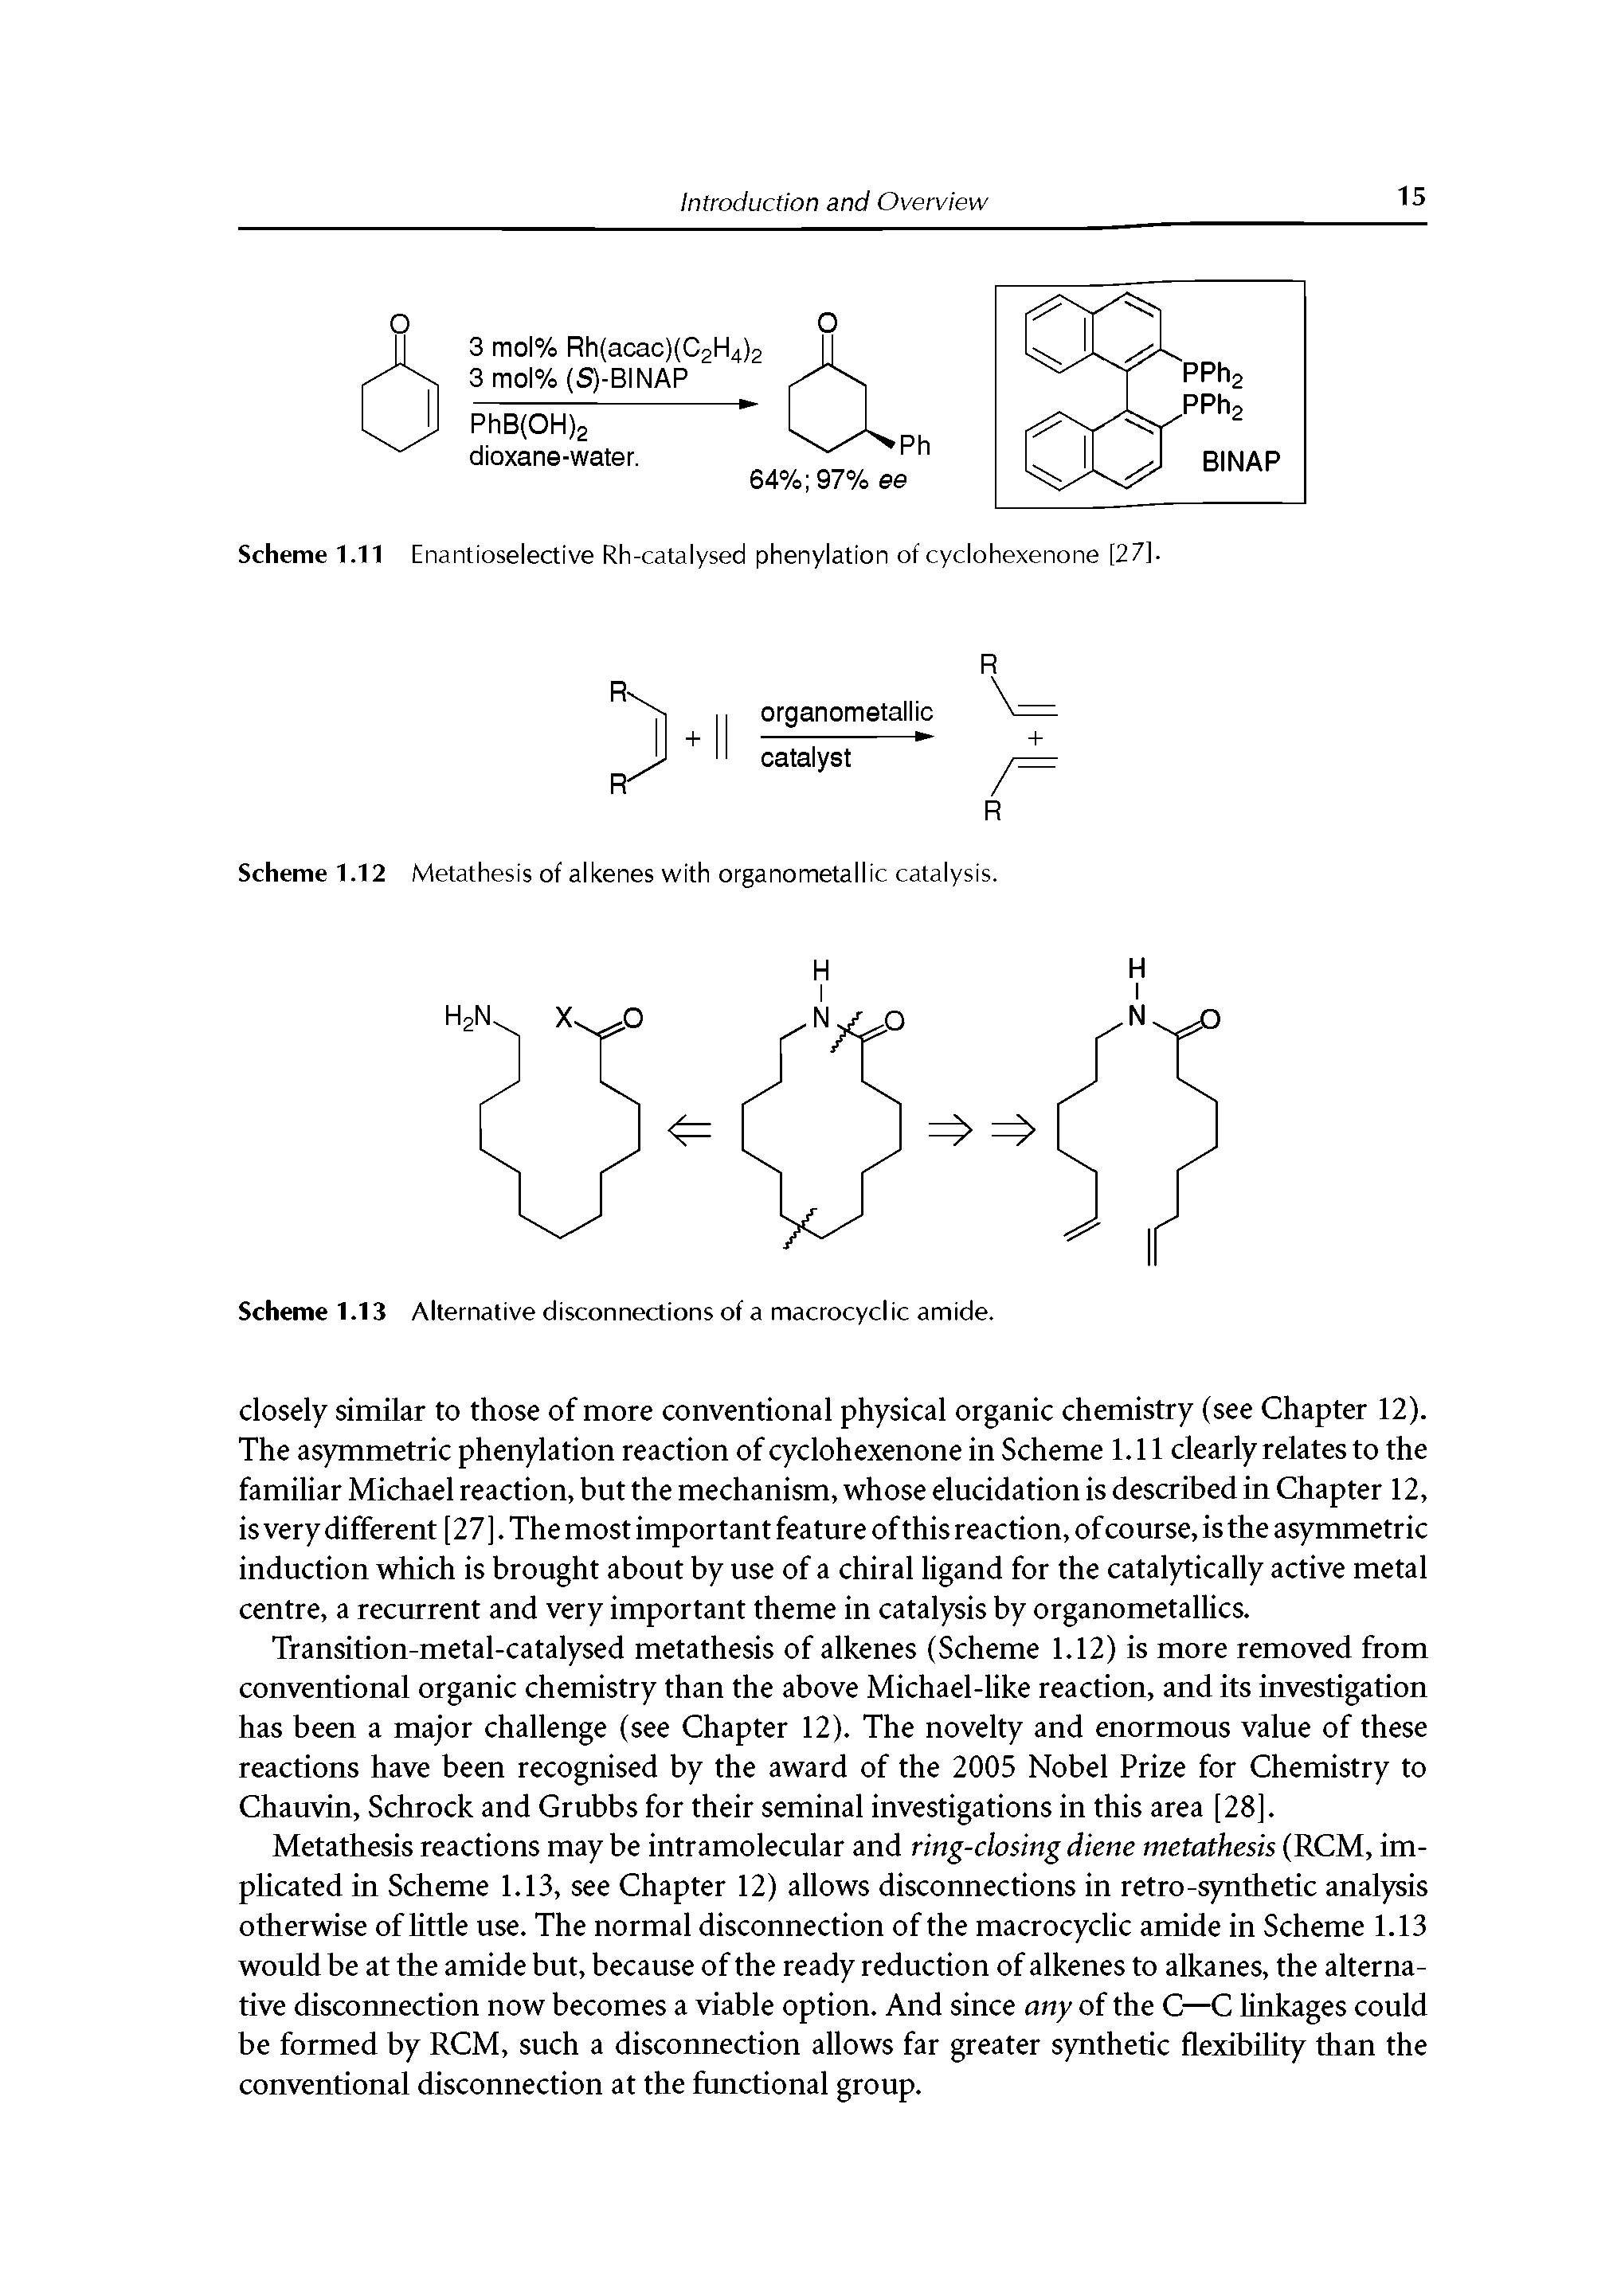 Scheme 1.12 Metathesis of alkenes with organometallic catalysis.